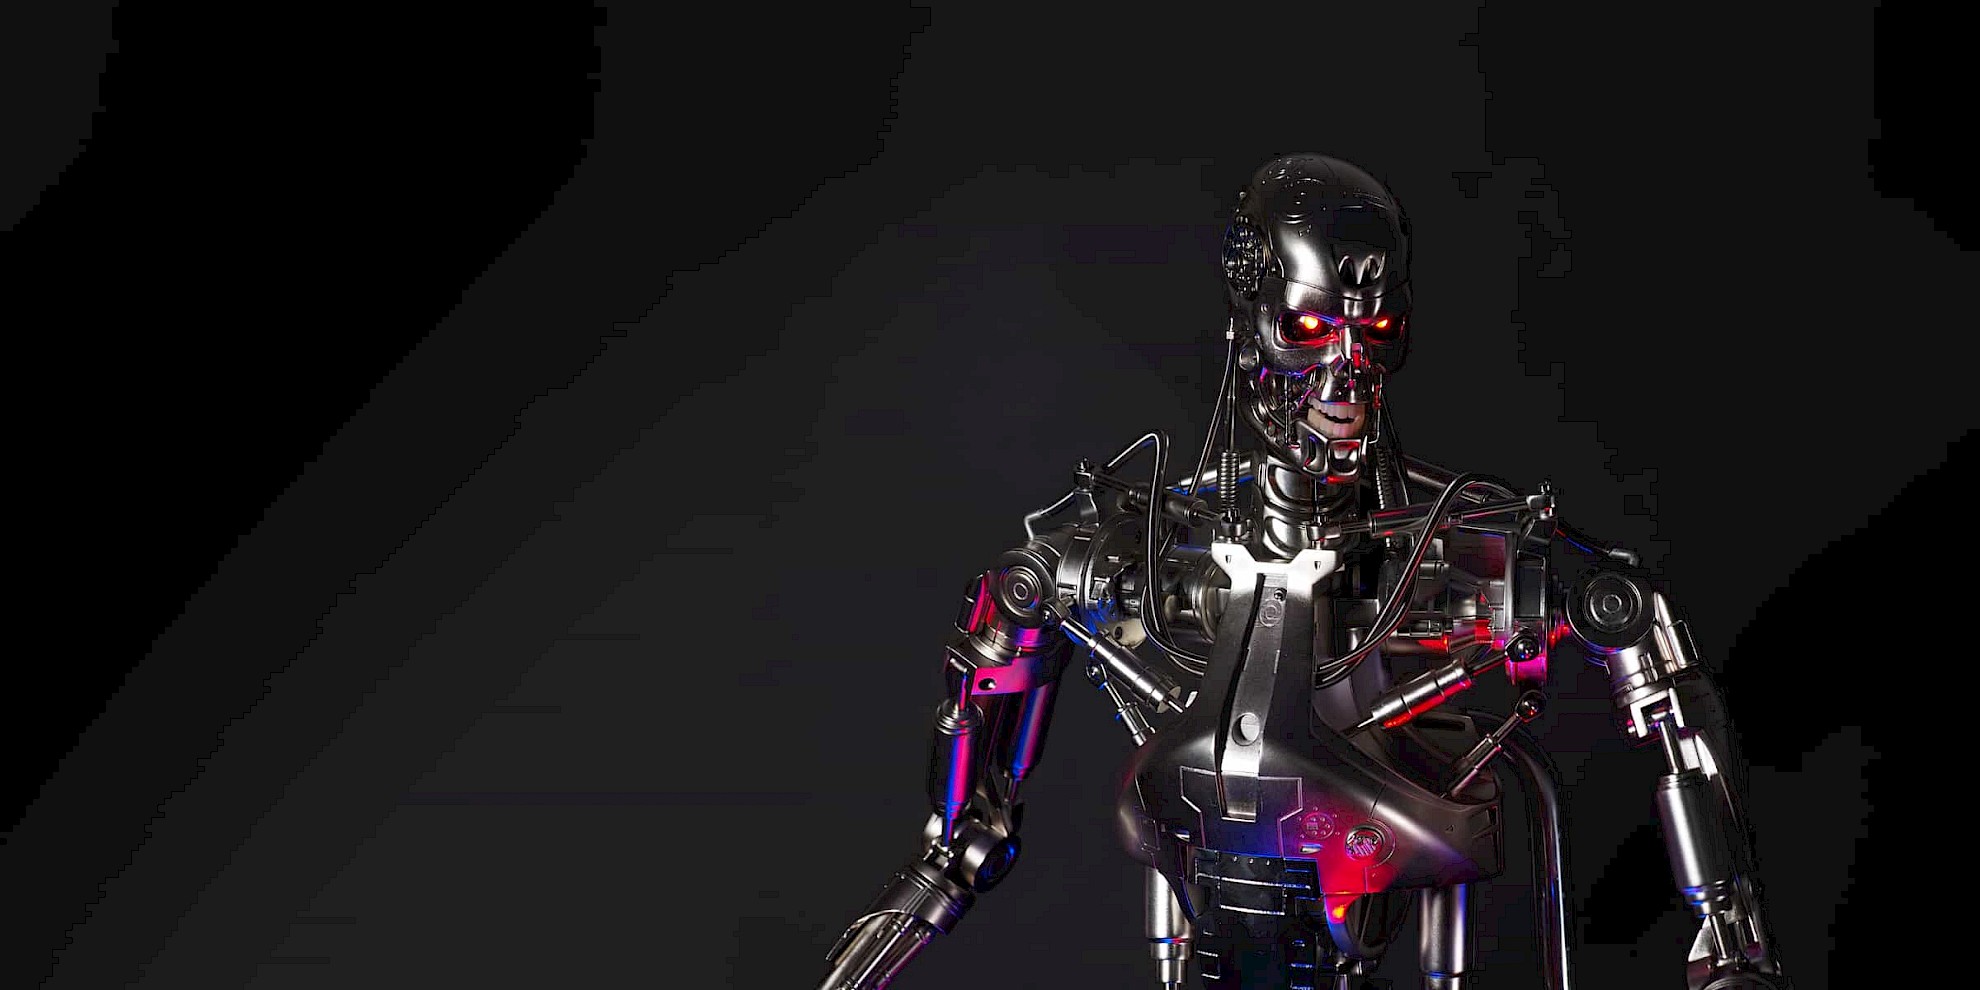 T2 Terminator T800 Endoskeleton 1:2 Halfsize Kit Movable